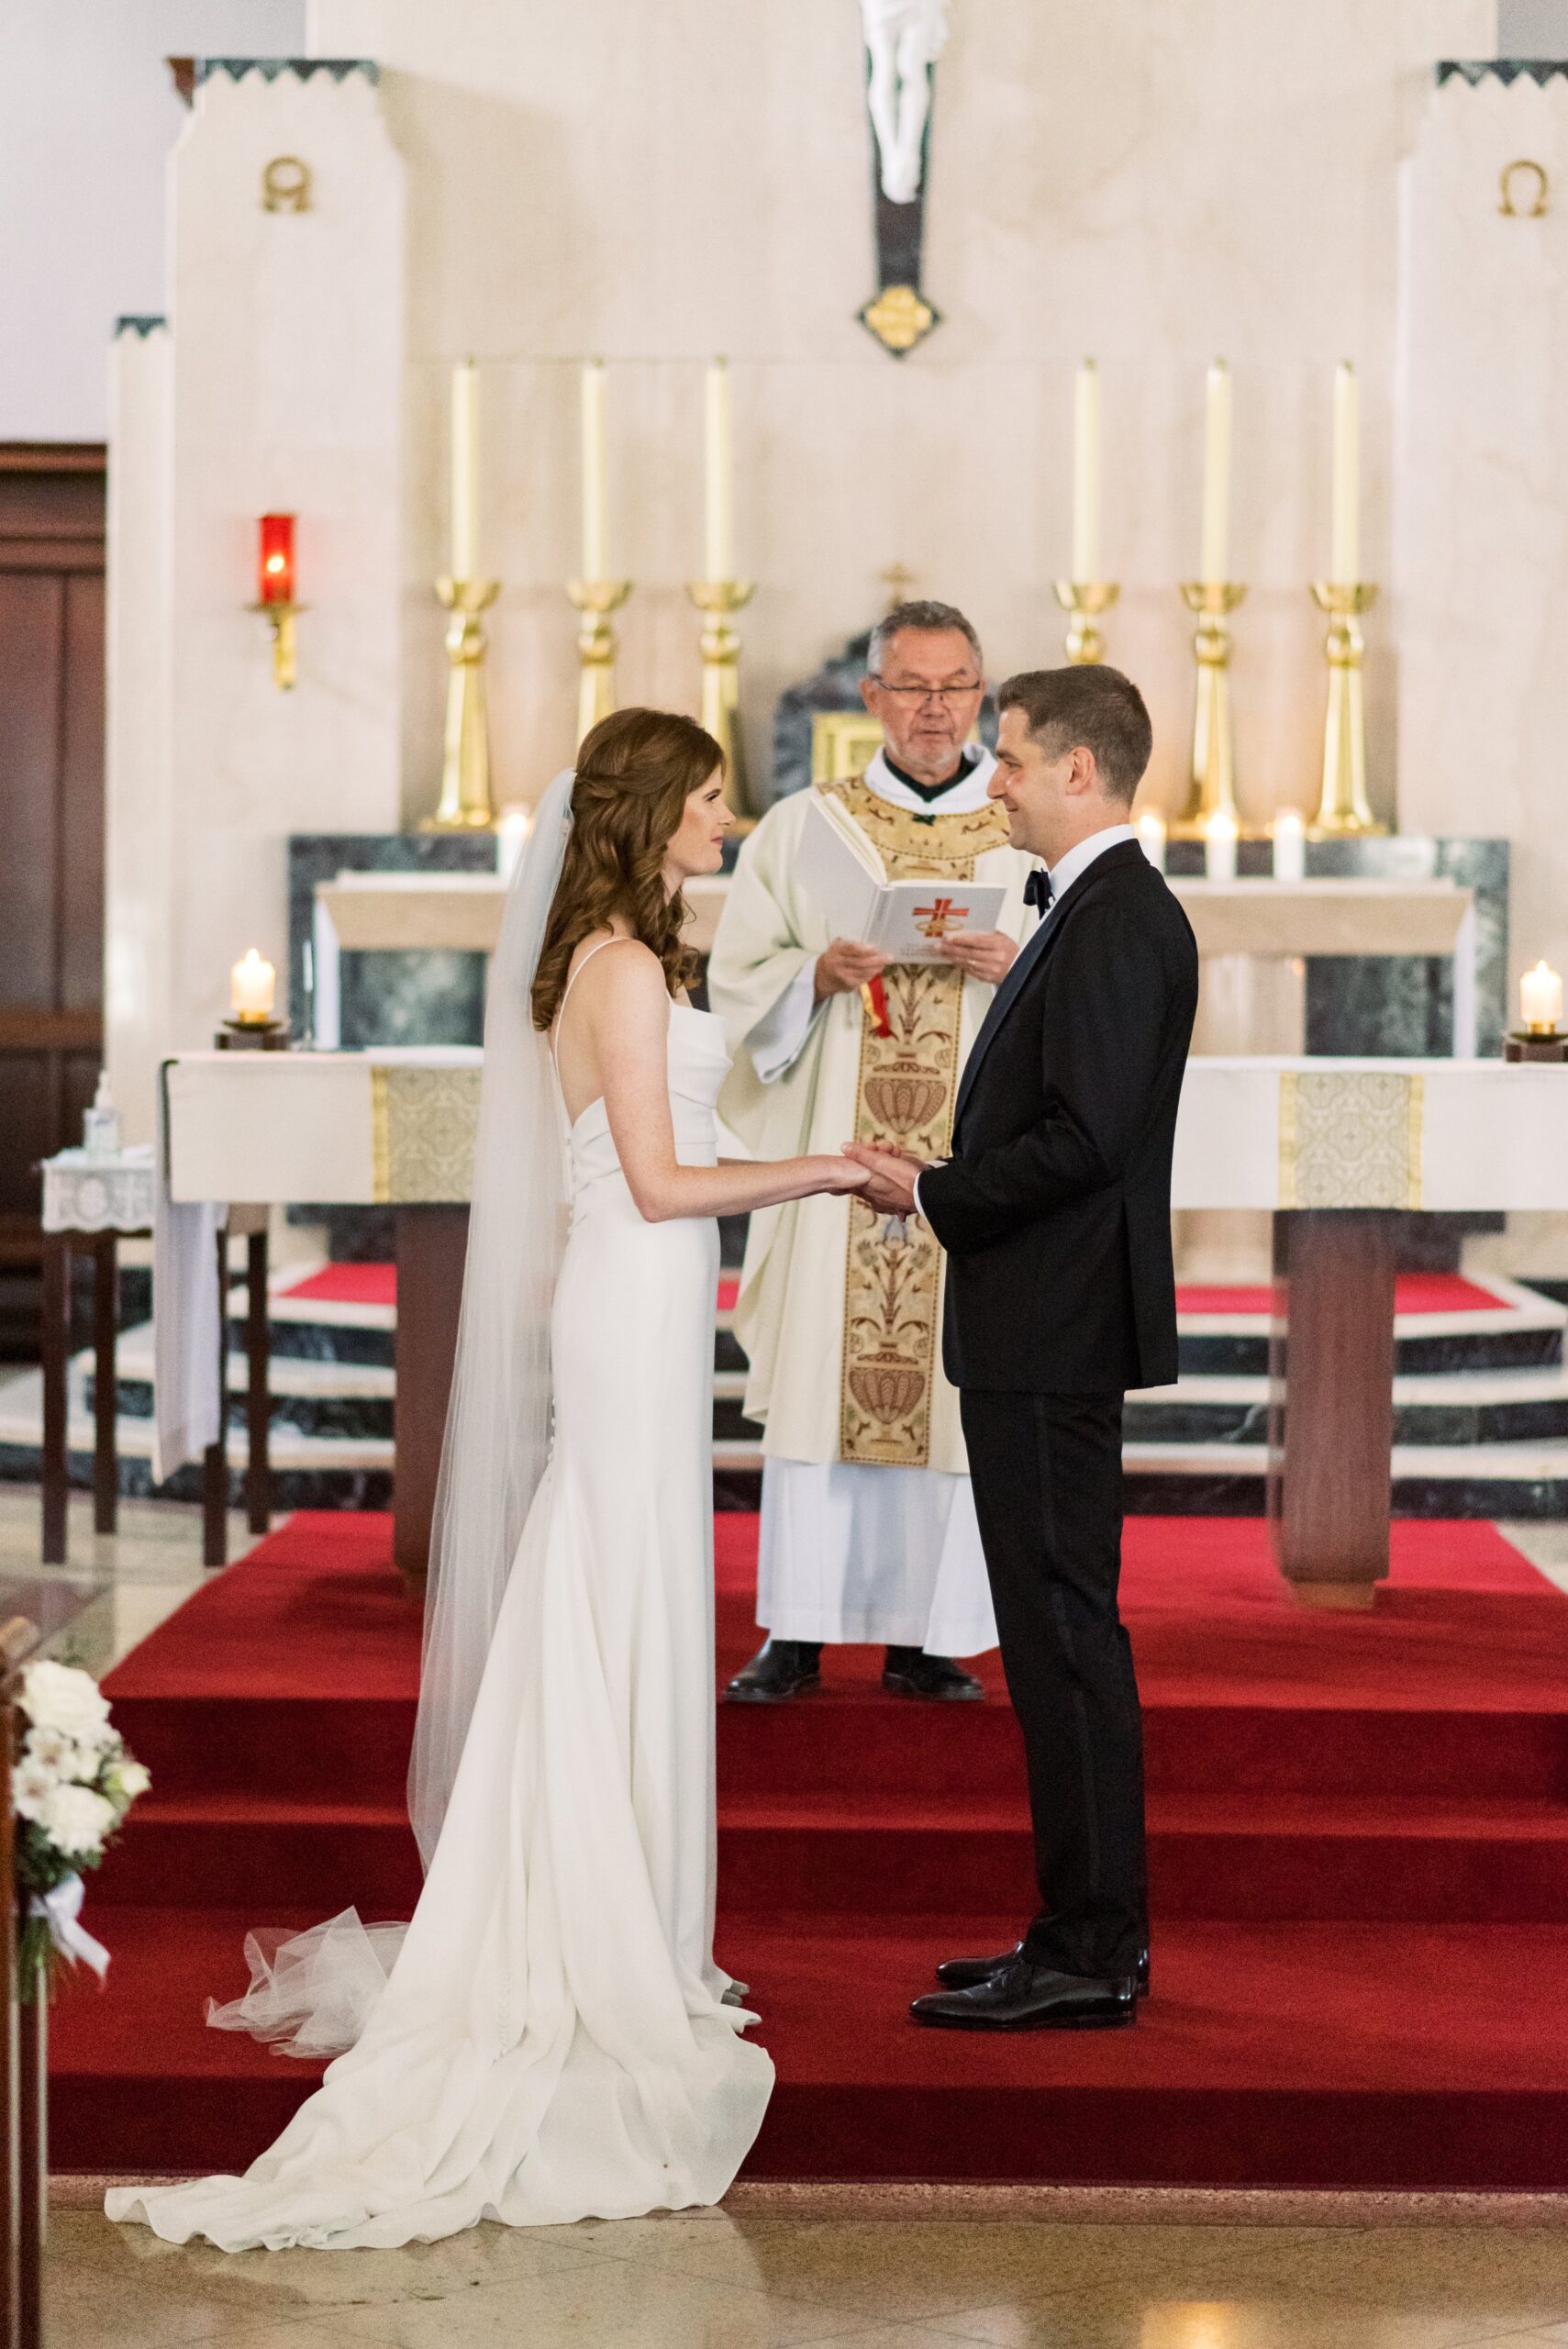 Wedding Ceremony at Saint Thomas Aquinas Church in Halifax, Nova Scotia